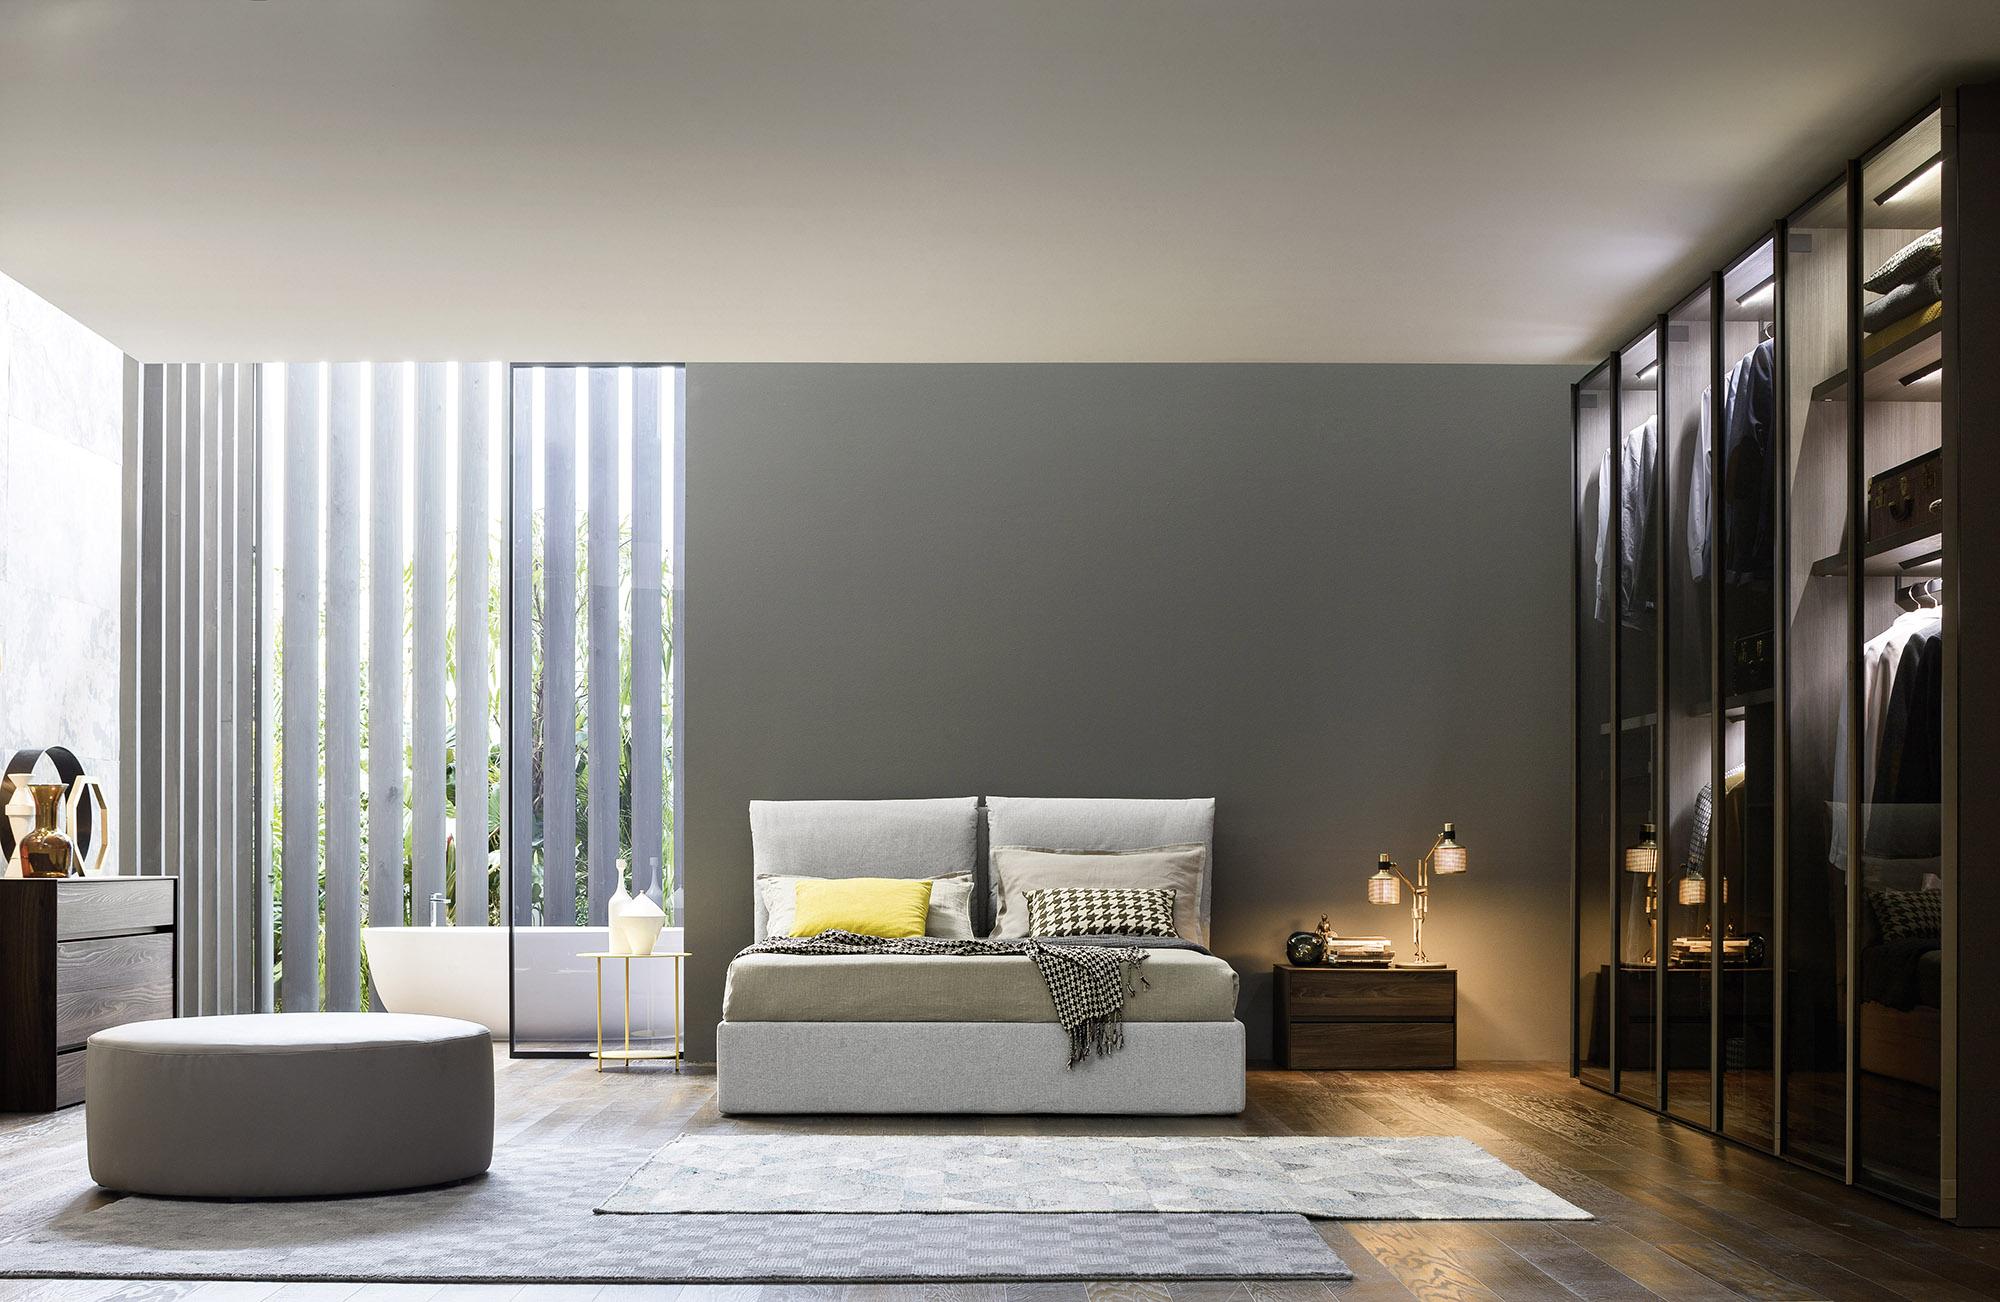 Modernes Schlafzimmer Design Glastüren Kleiderschrank #bett #kleiderschrank #beleuchtung #glastür ©Livarea.de